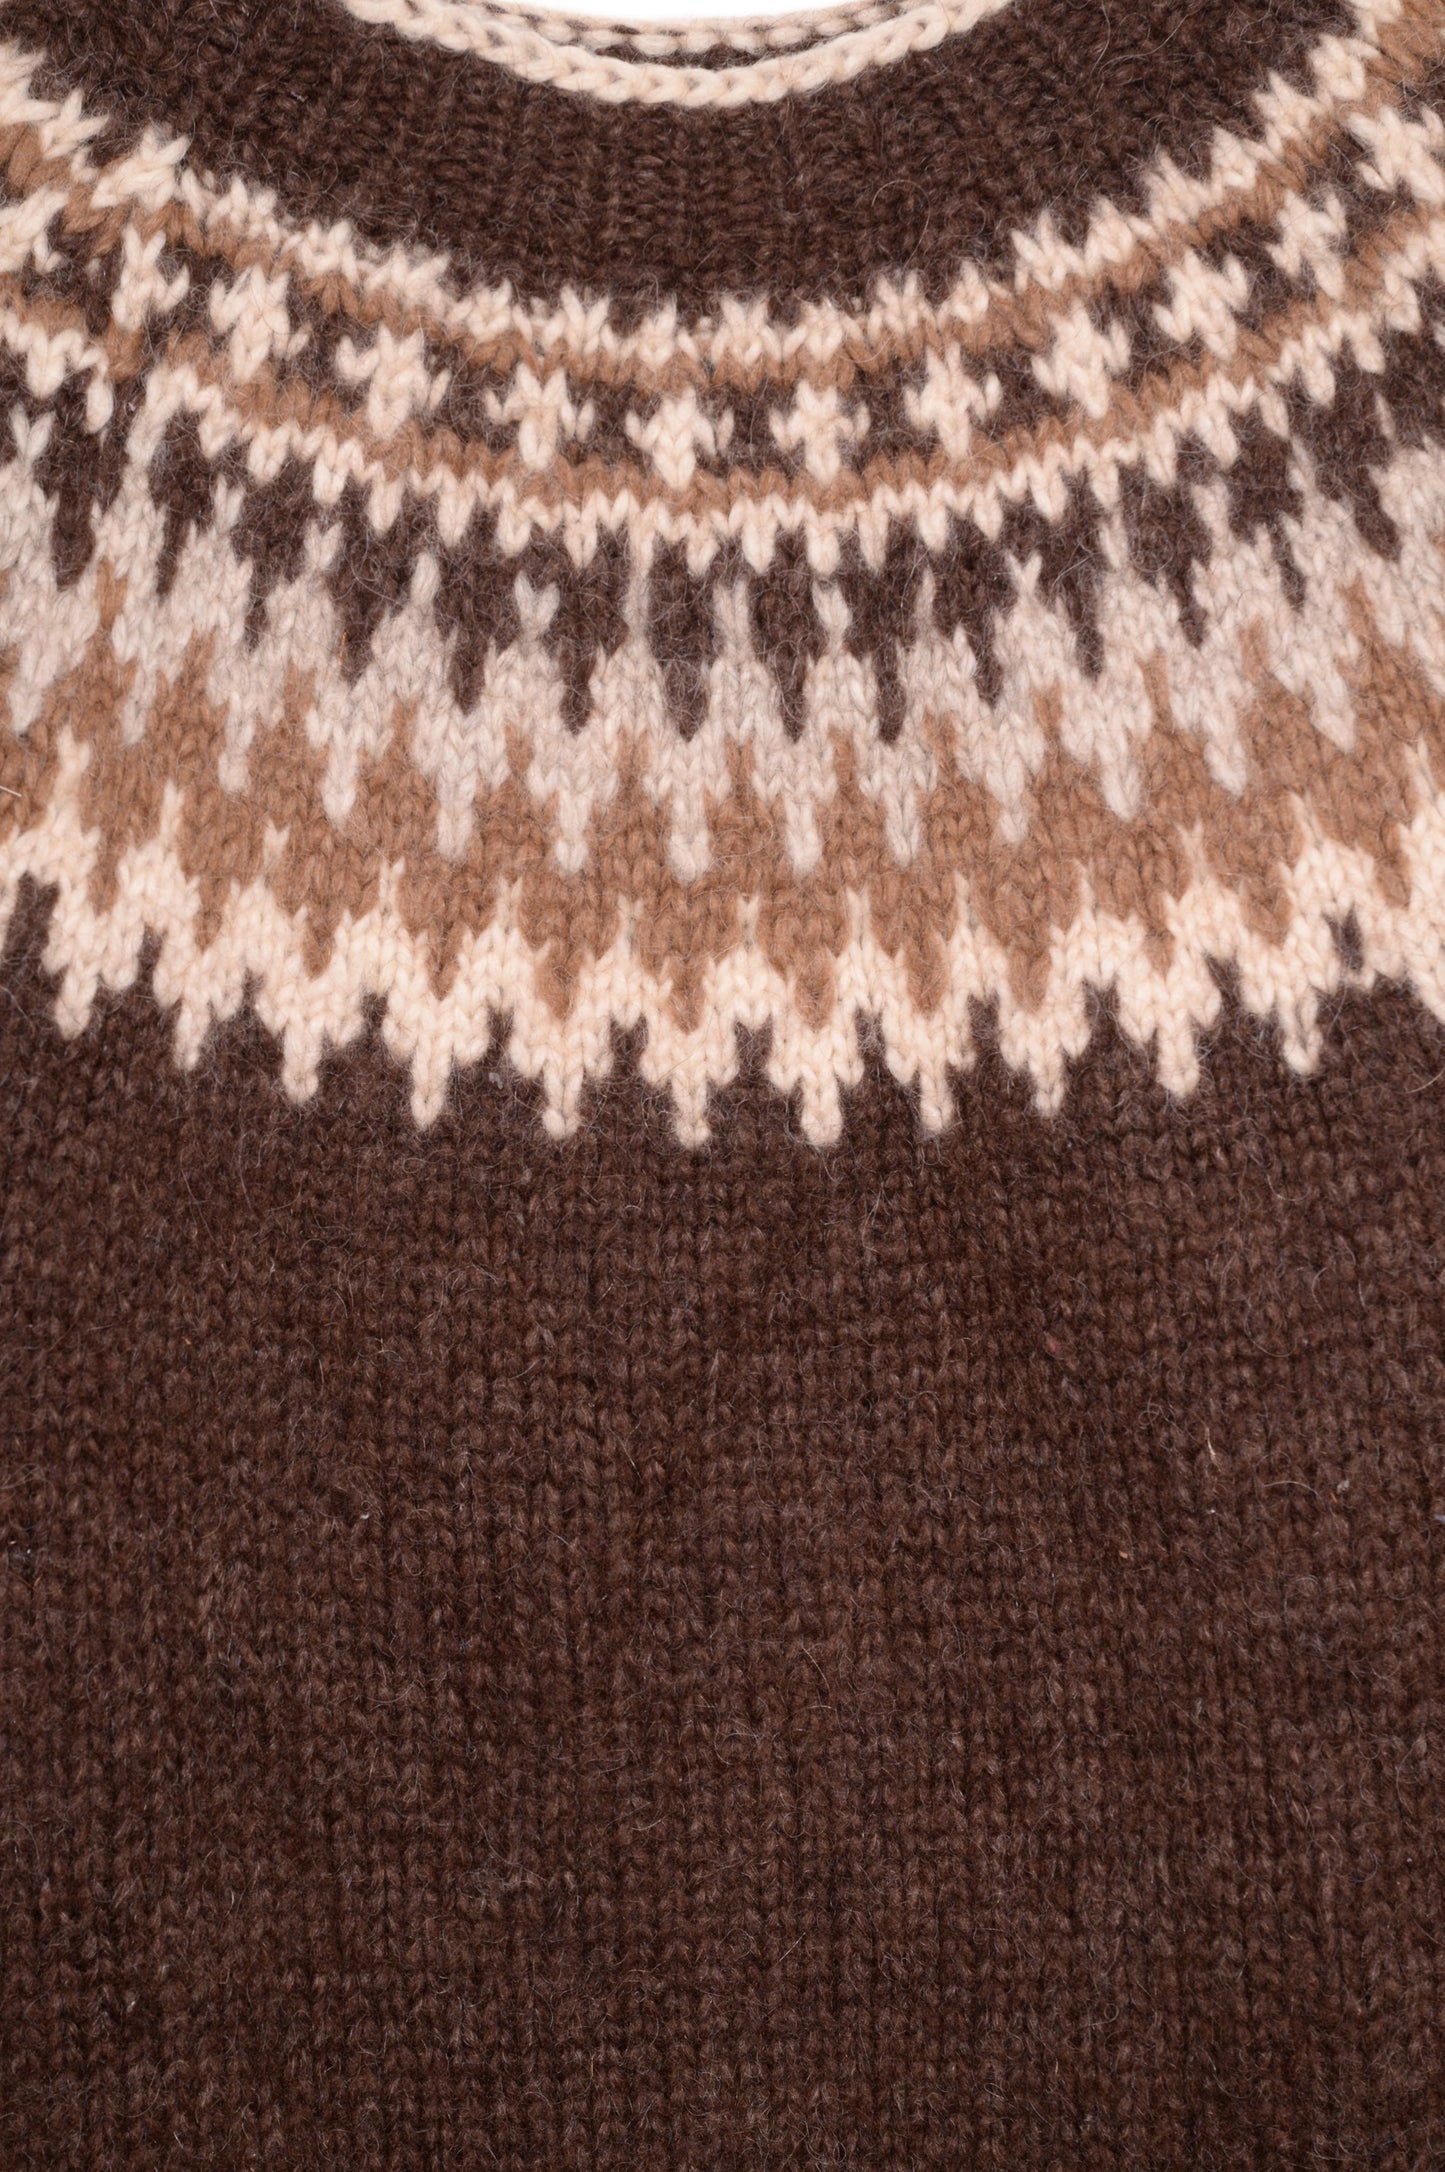 1970s Hand Knit Icelandic Wool Sweater